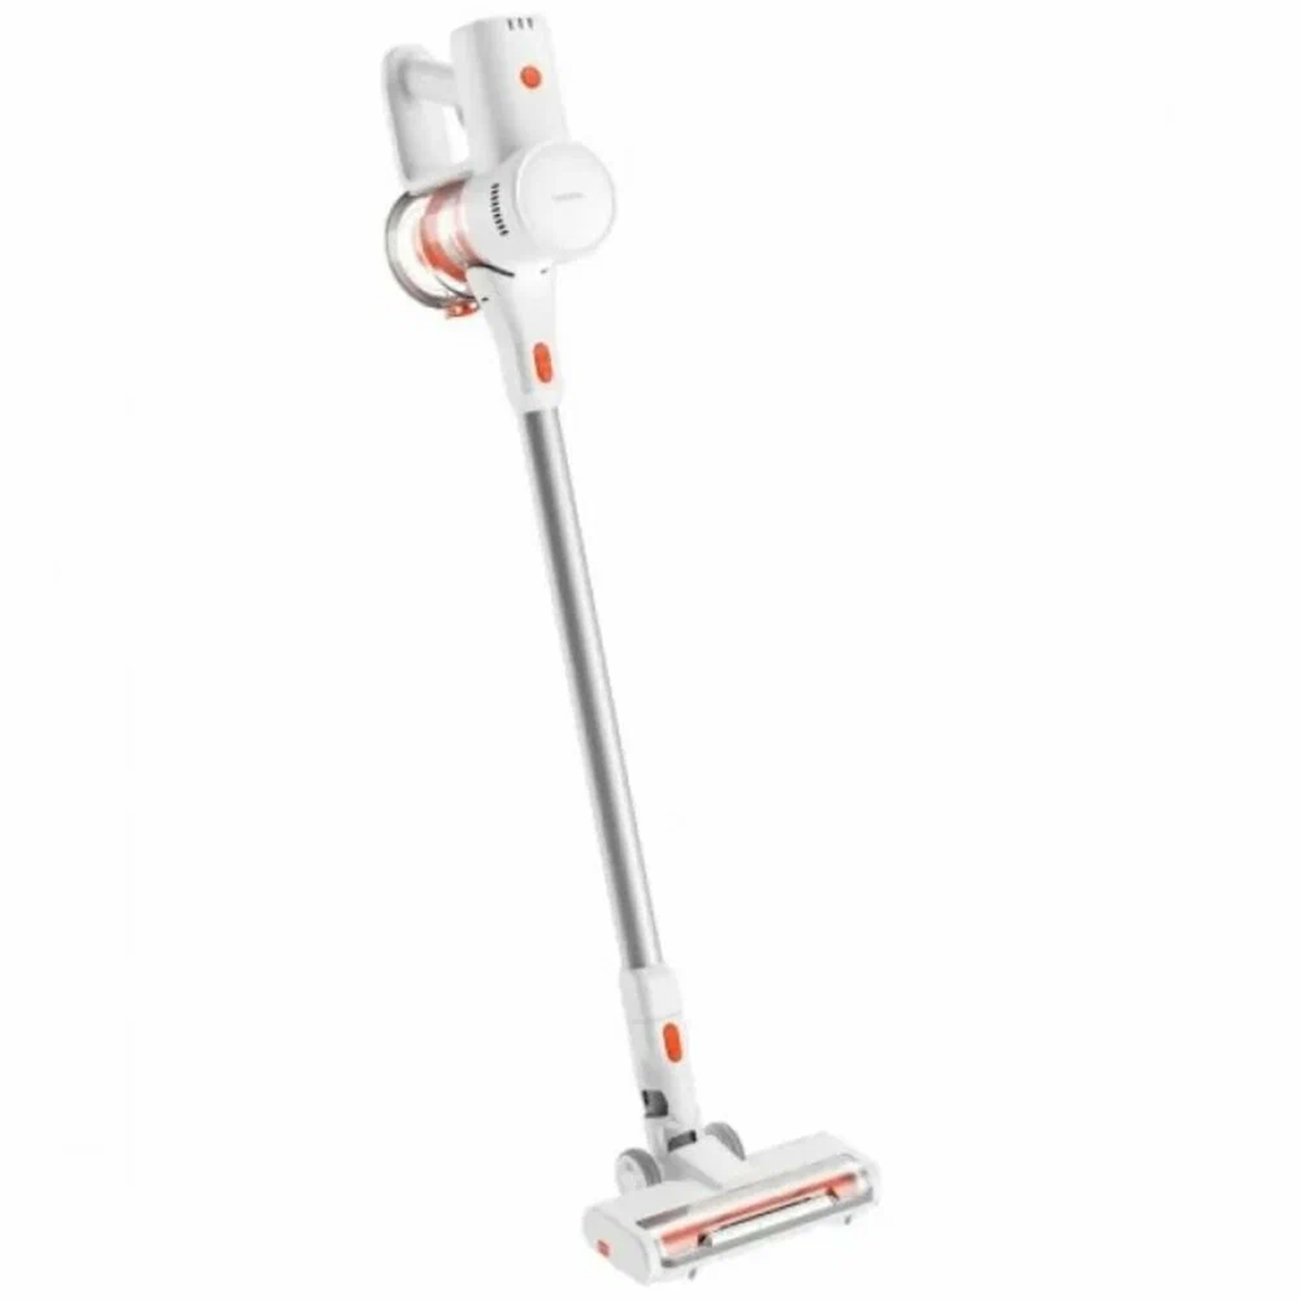 Пылесос Xiaomi Mi Handheld Vacuum Cleaner G20 Lite (Белый)